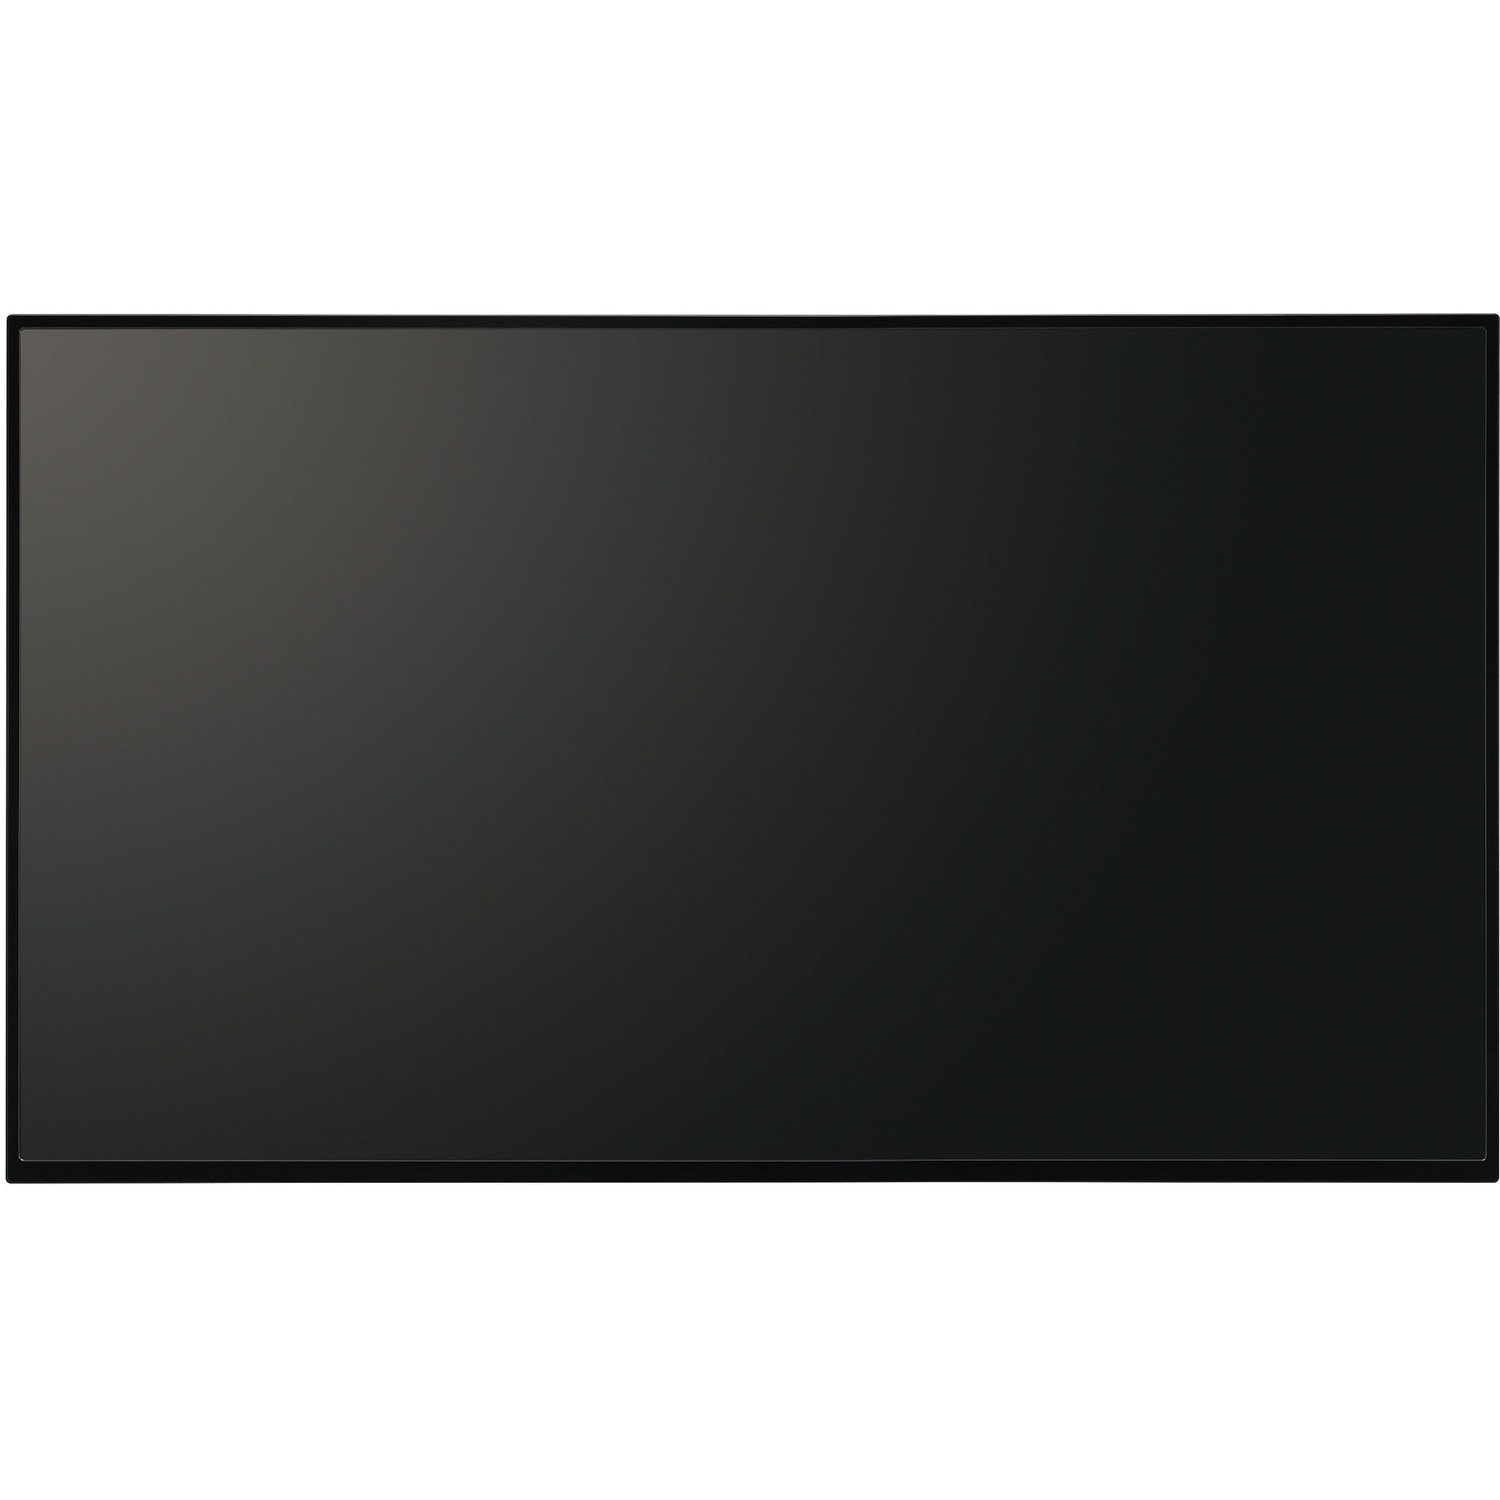 Sharp PN-Y436 Digital Signage Display